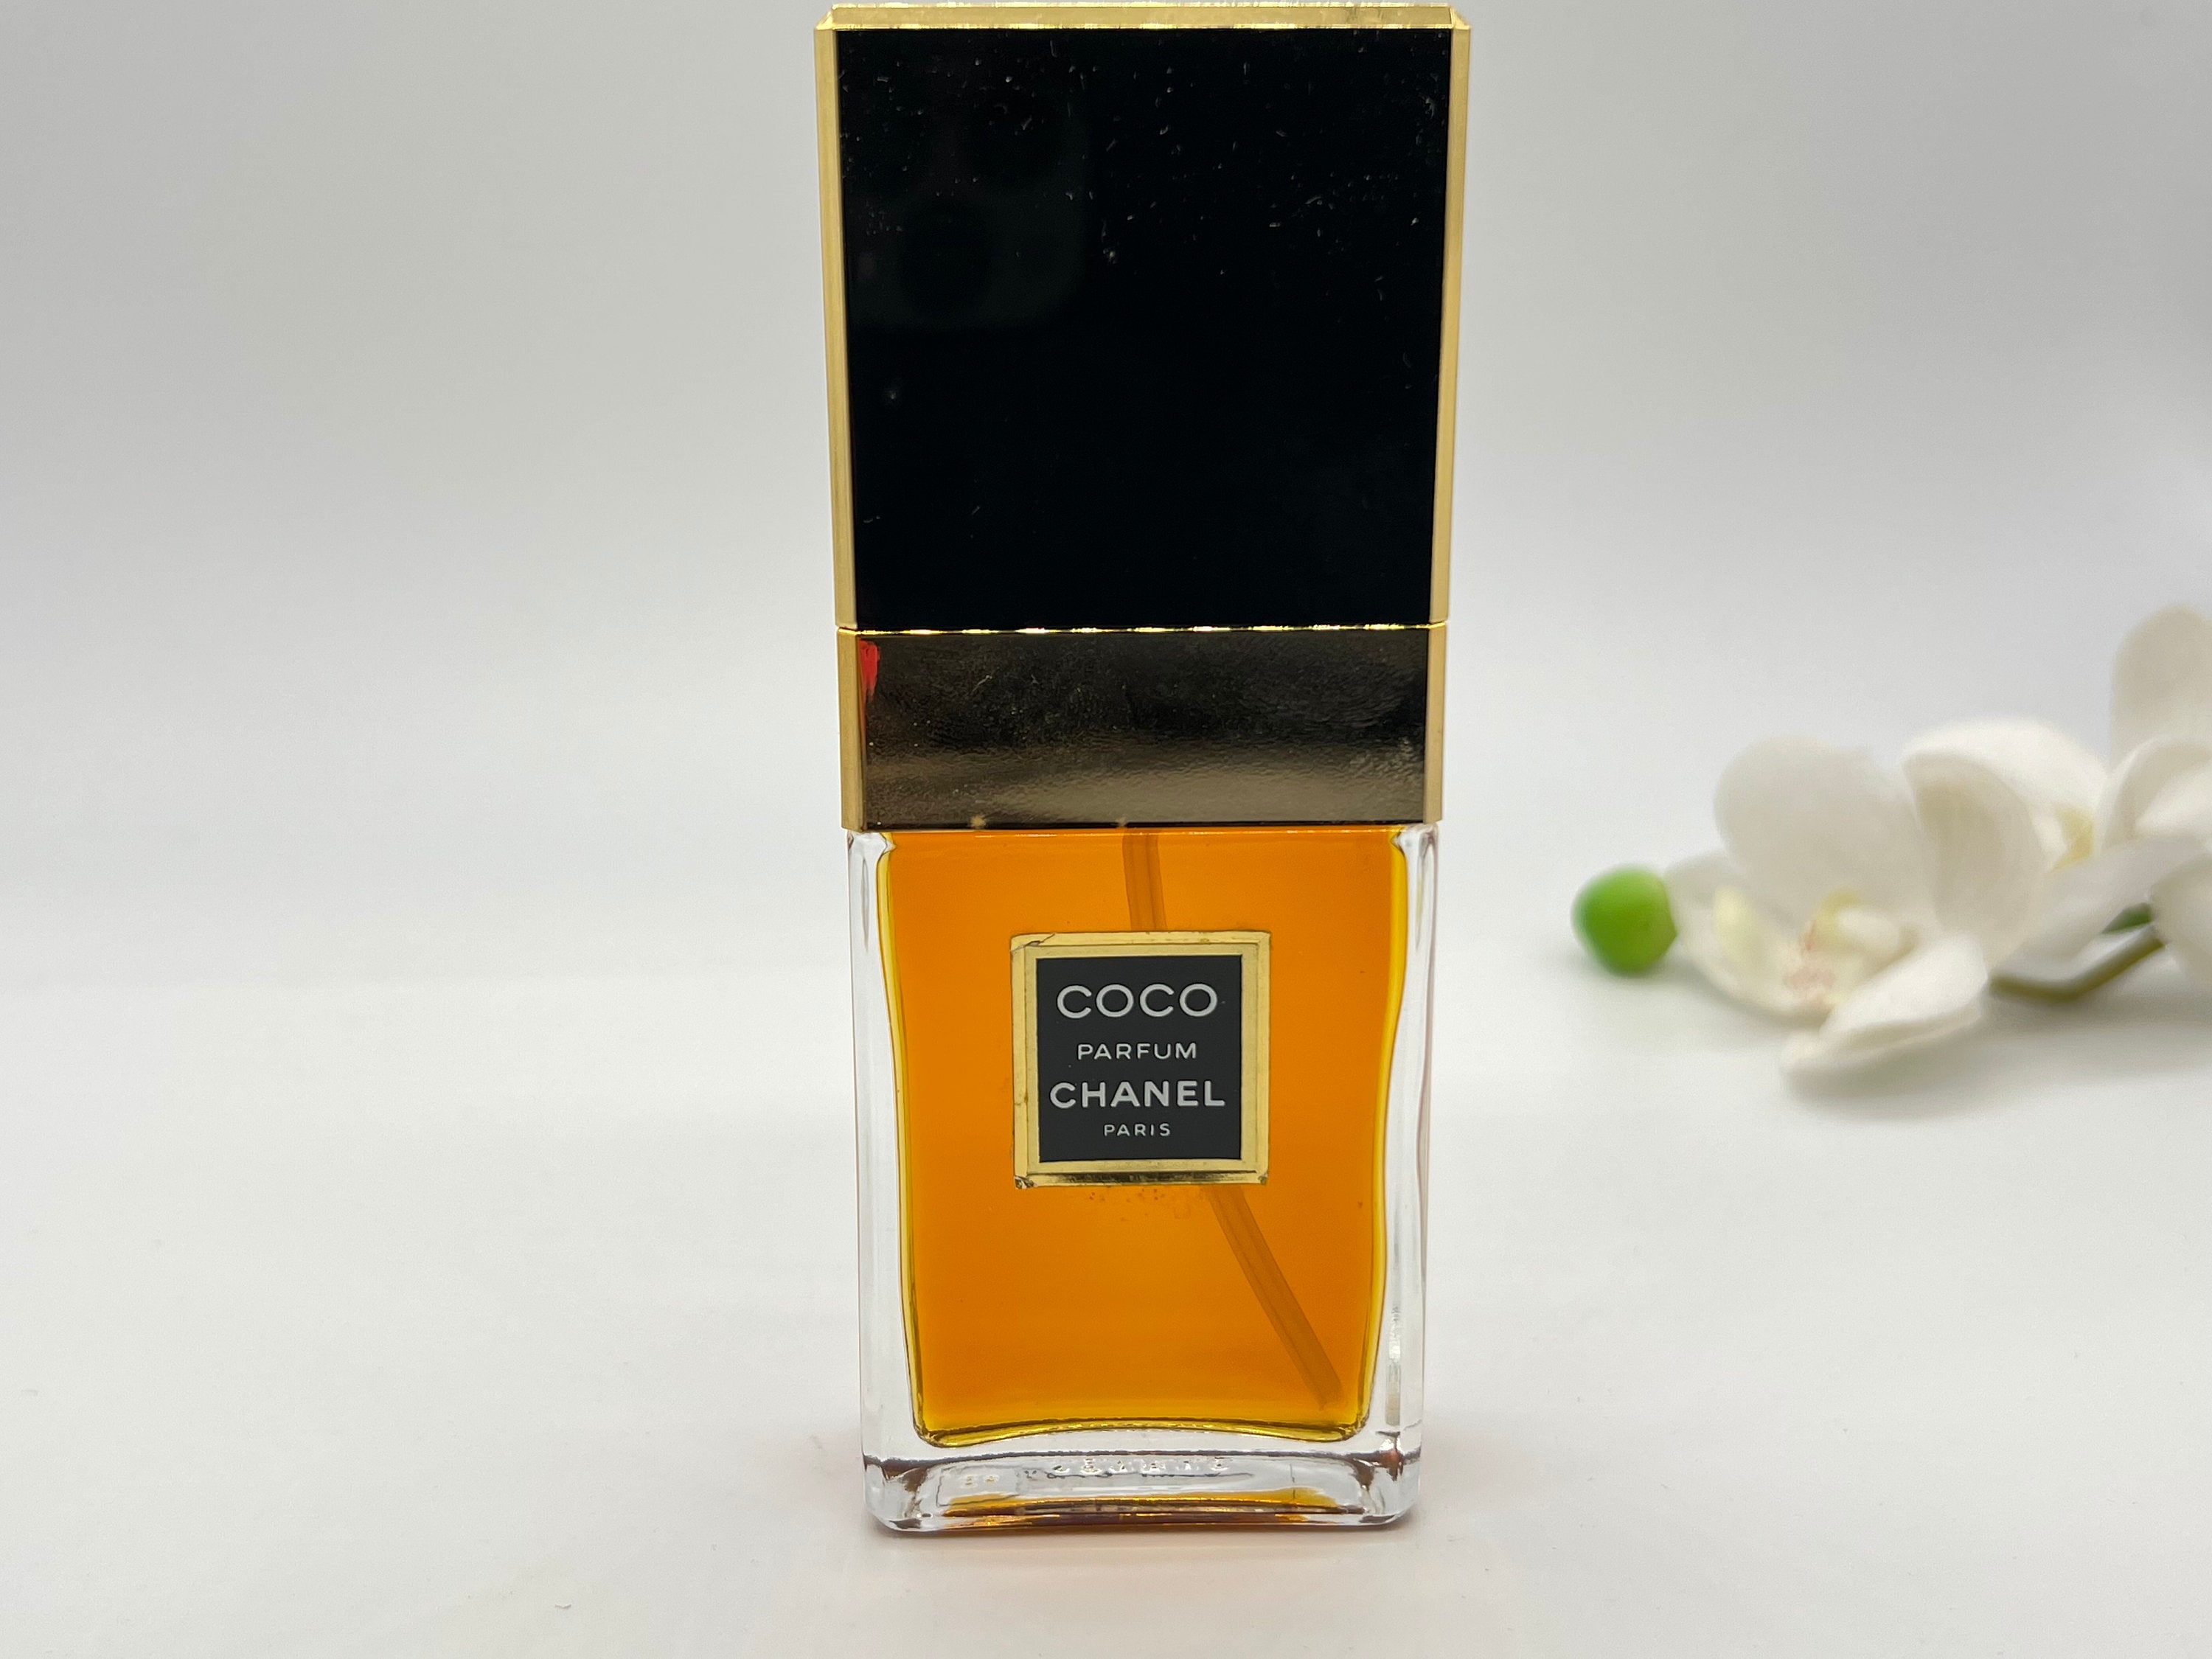 Coco parfum Chanel pure parfum 60 ml. Rare, vintage 1984. Sealed